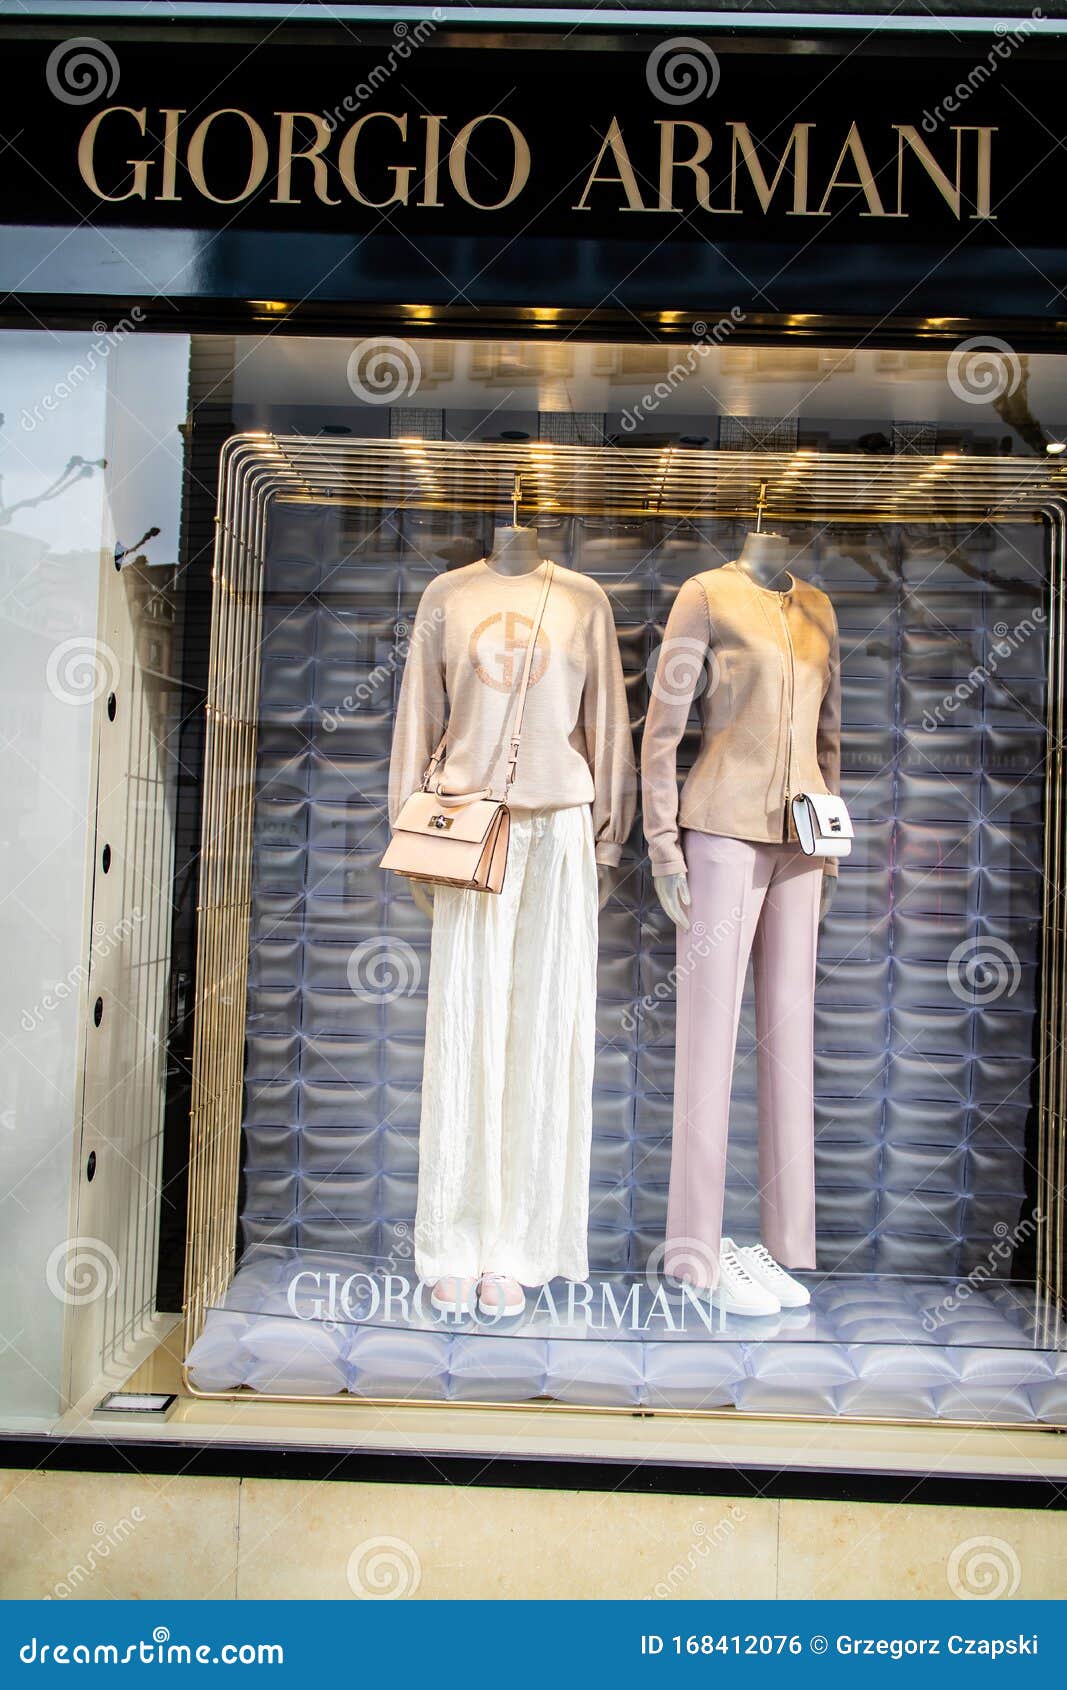 Giorgio Armani Fashion Store, Window Shop, Clothes, Shoes on Display for  Sale, Modern Giorgio Armani Fashion House Editorial Photo - Image of brand,  designer: 168412076